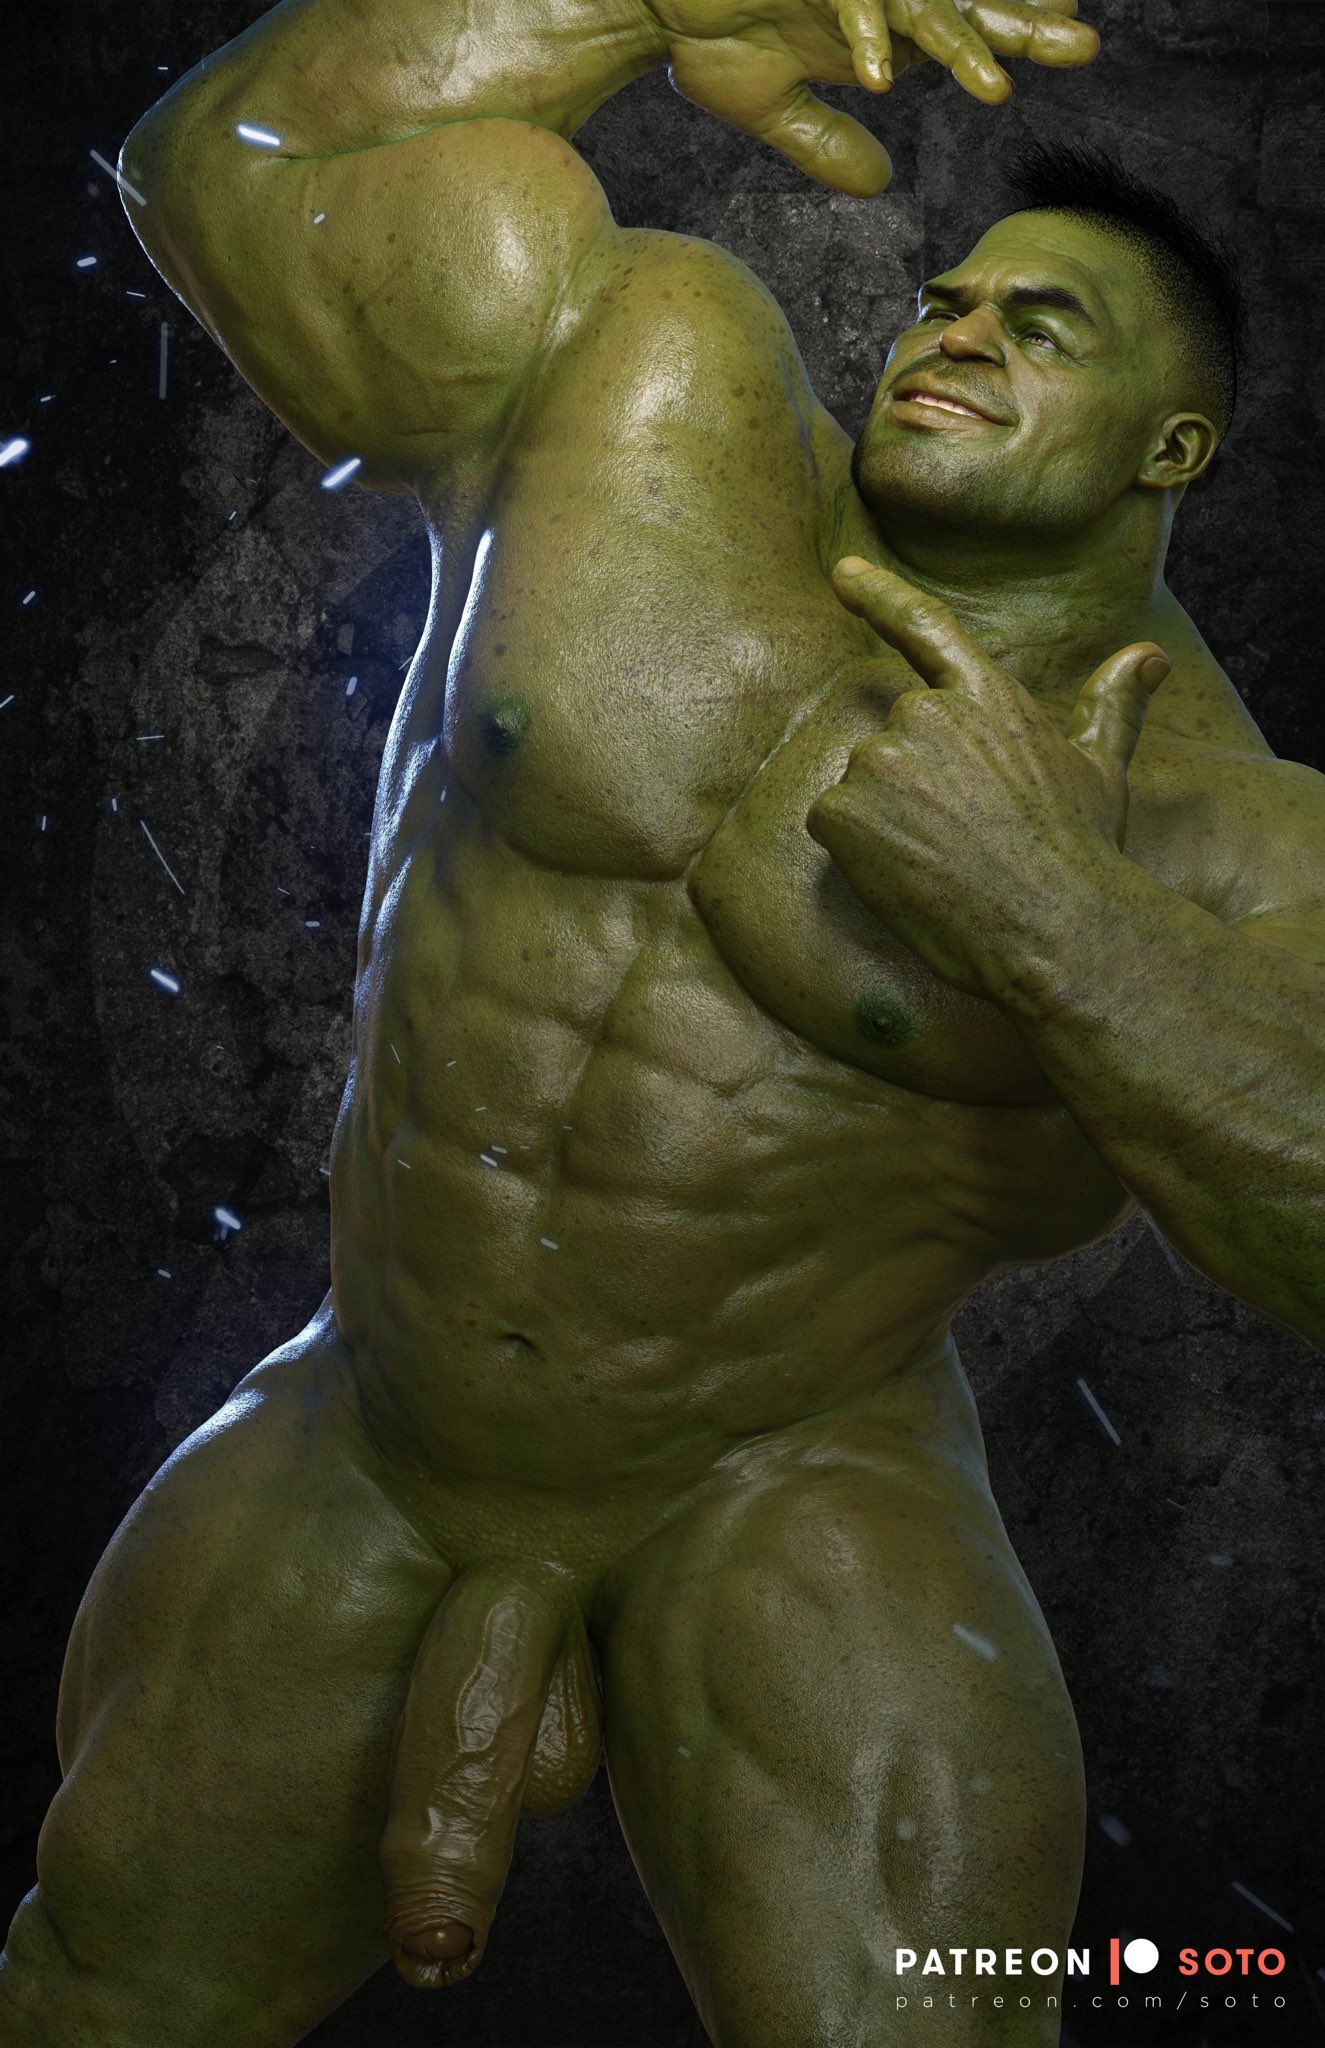 Banner & Hulk: Big brains, bigger cock. on Twitter: 